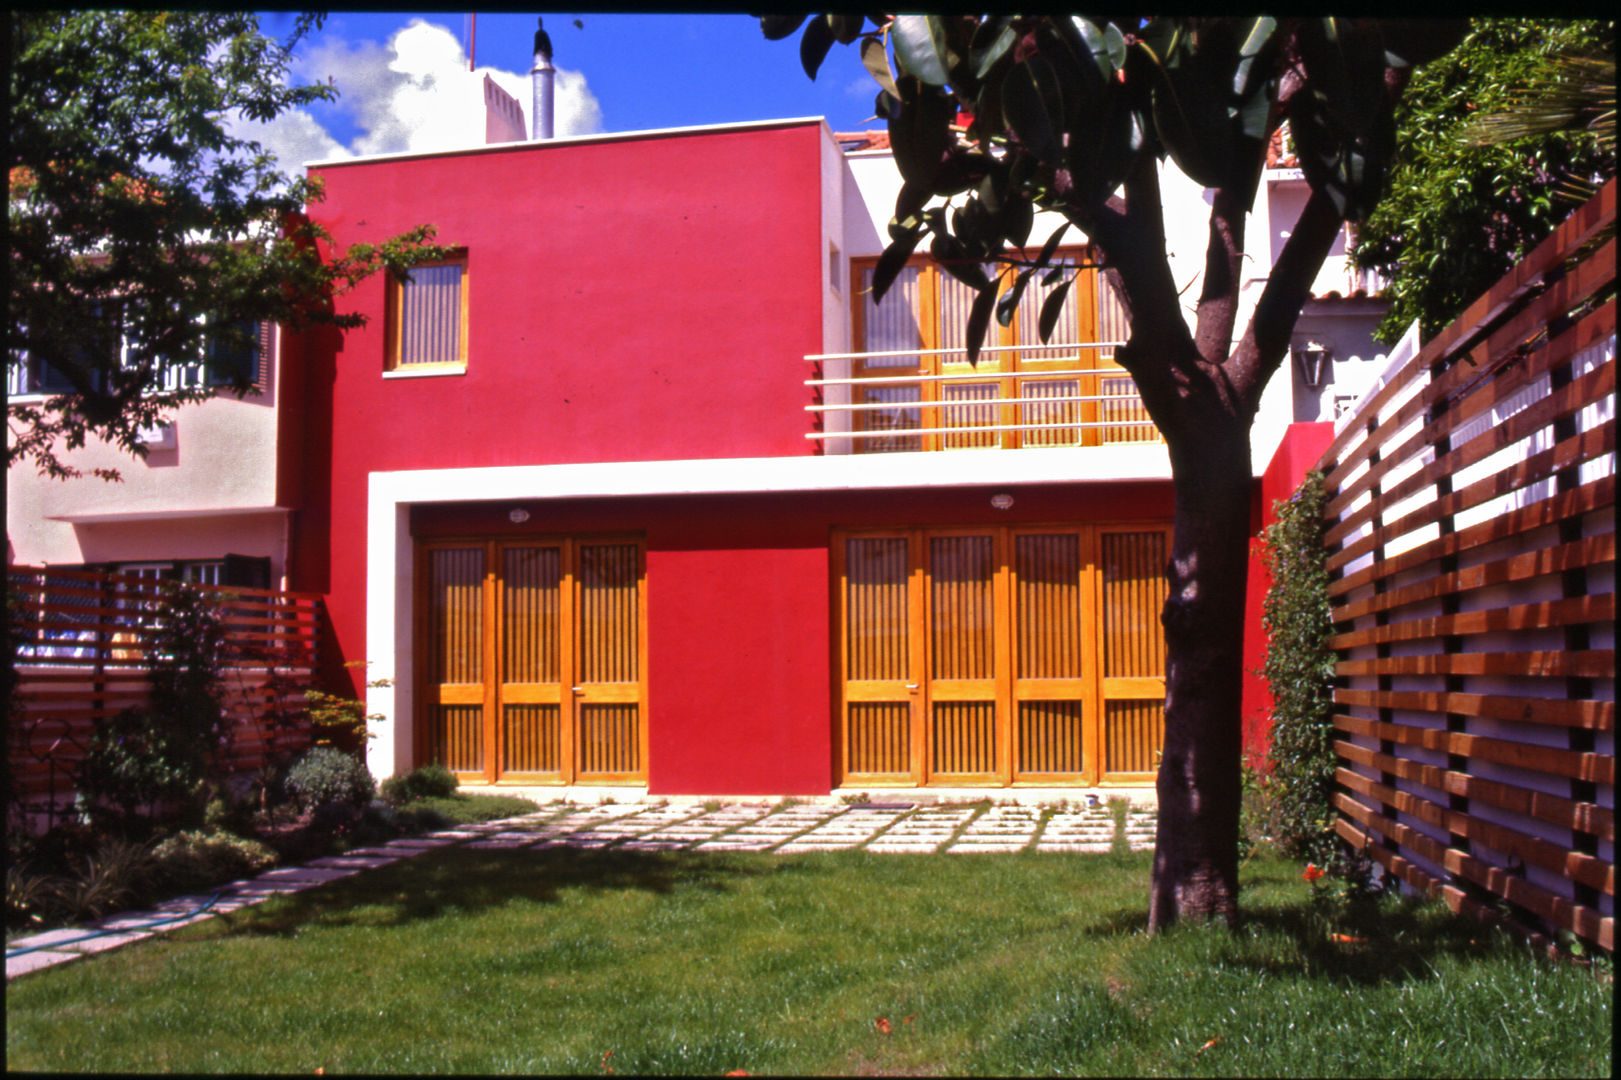 Casa no Restelo, Borges de Macedo, Arquitectura. Borges de Macedo, Arquitectura. Maisons modernes